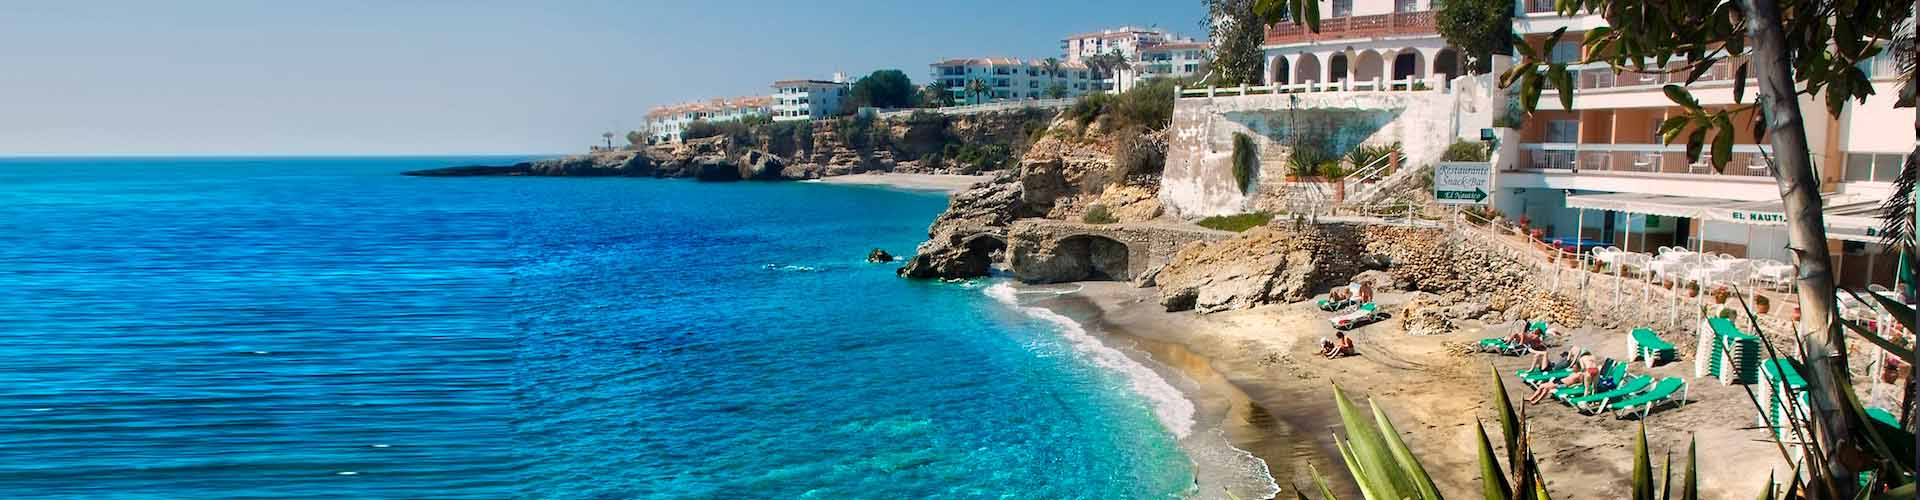 Checkout the famous beaches of Malaga